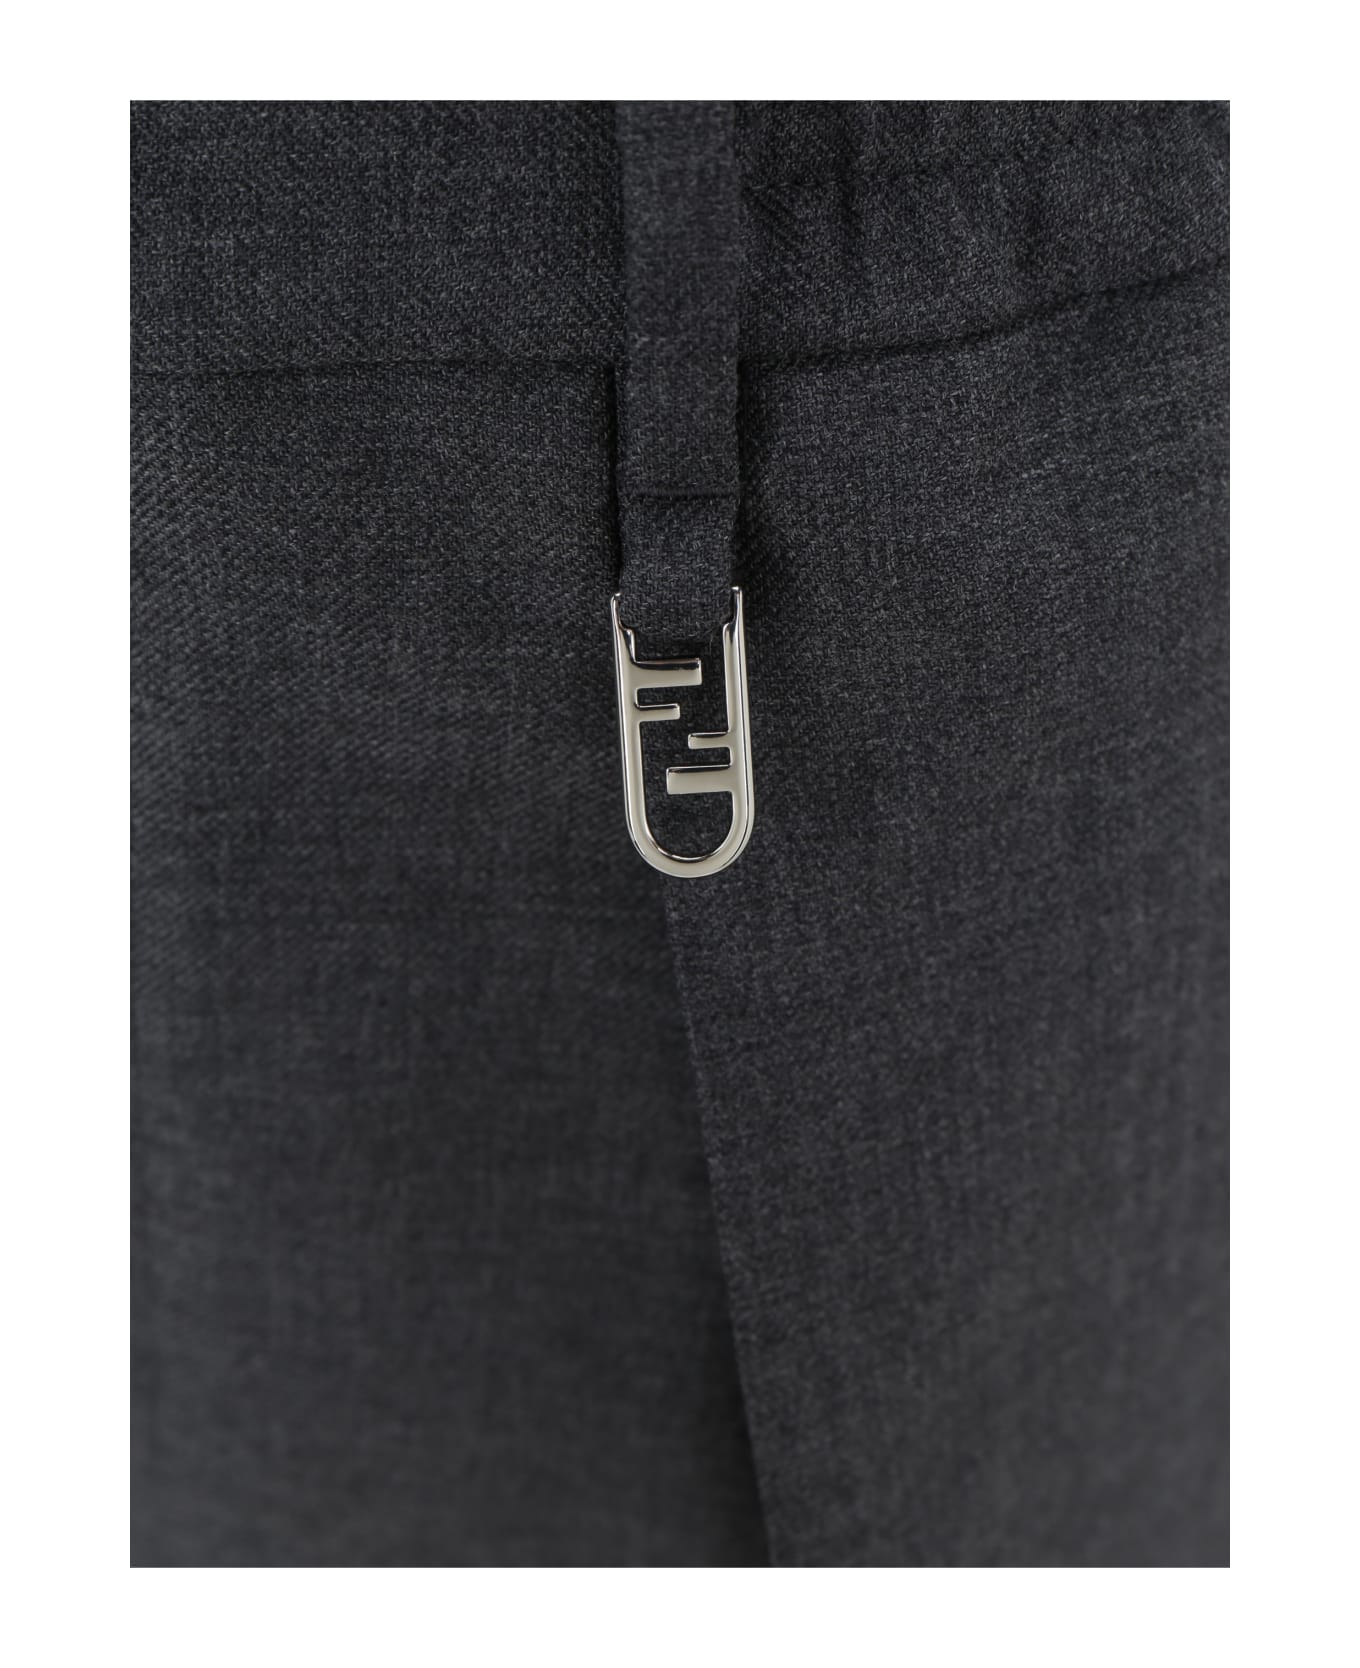 Fendi Wool Trousers - Grey